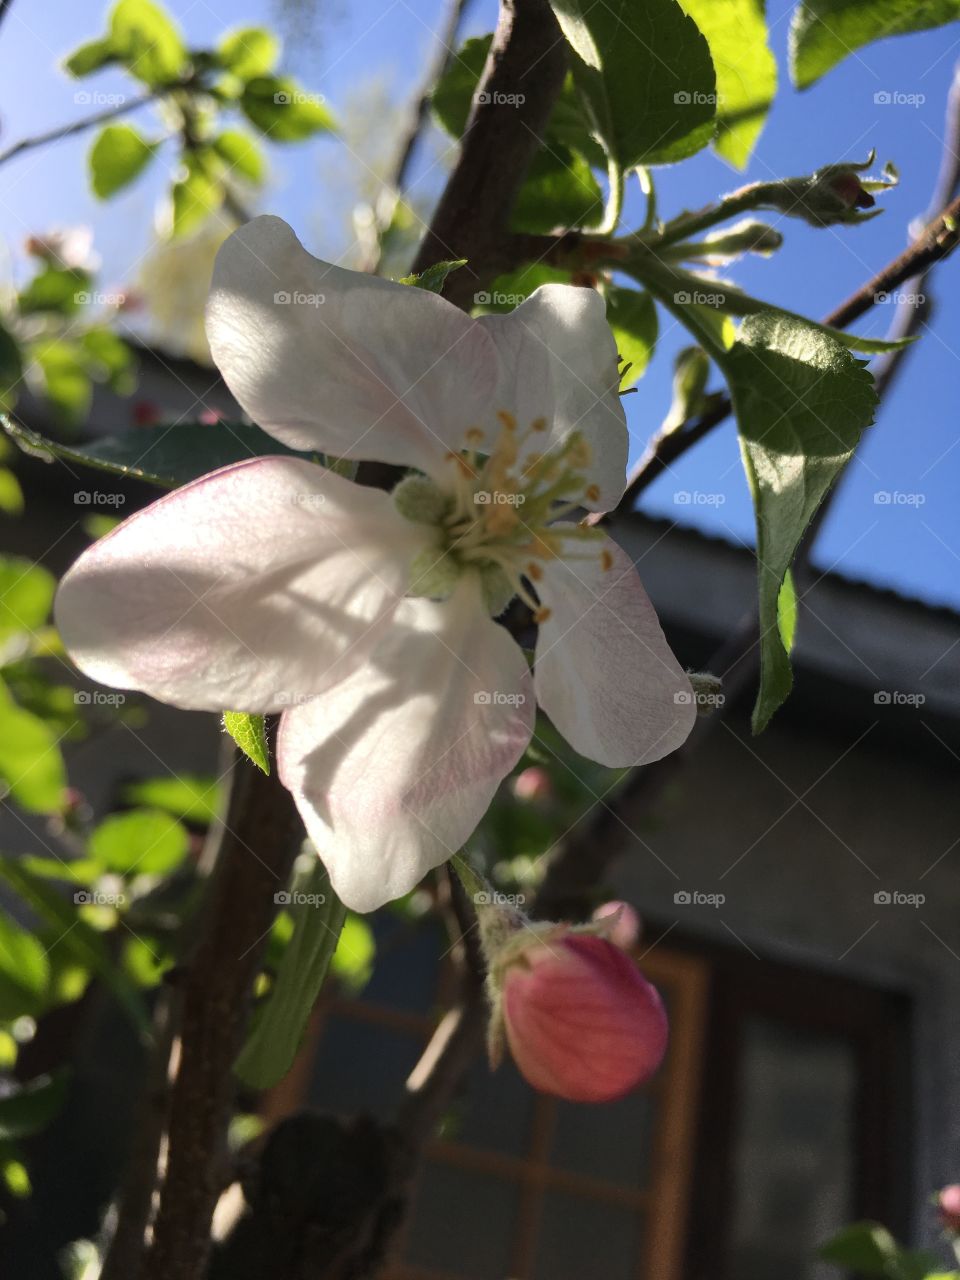 Apple blossom!